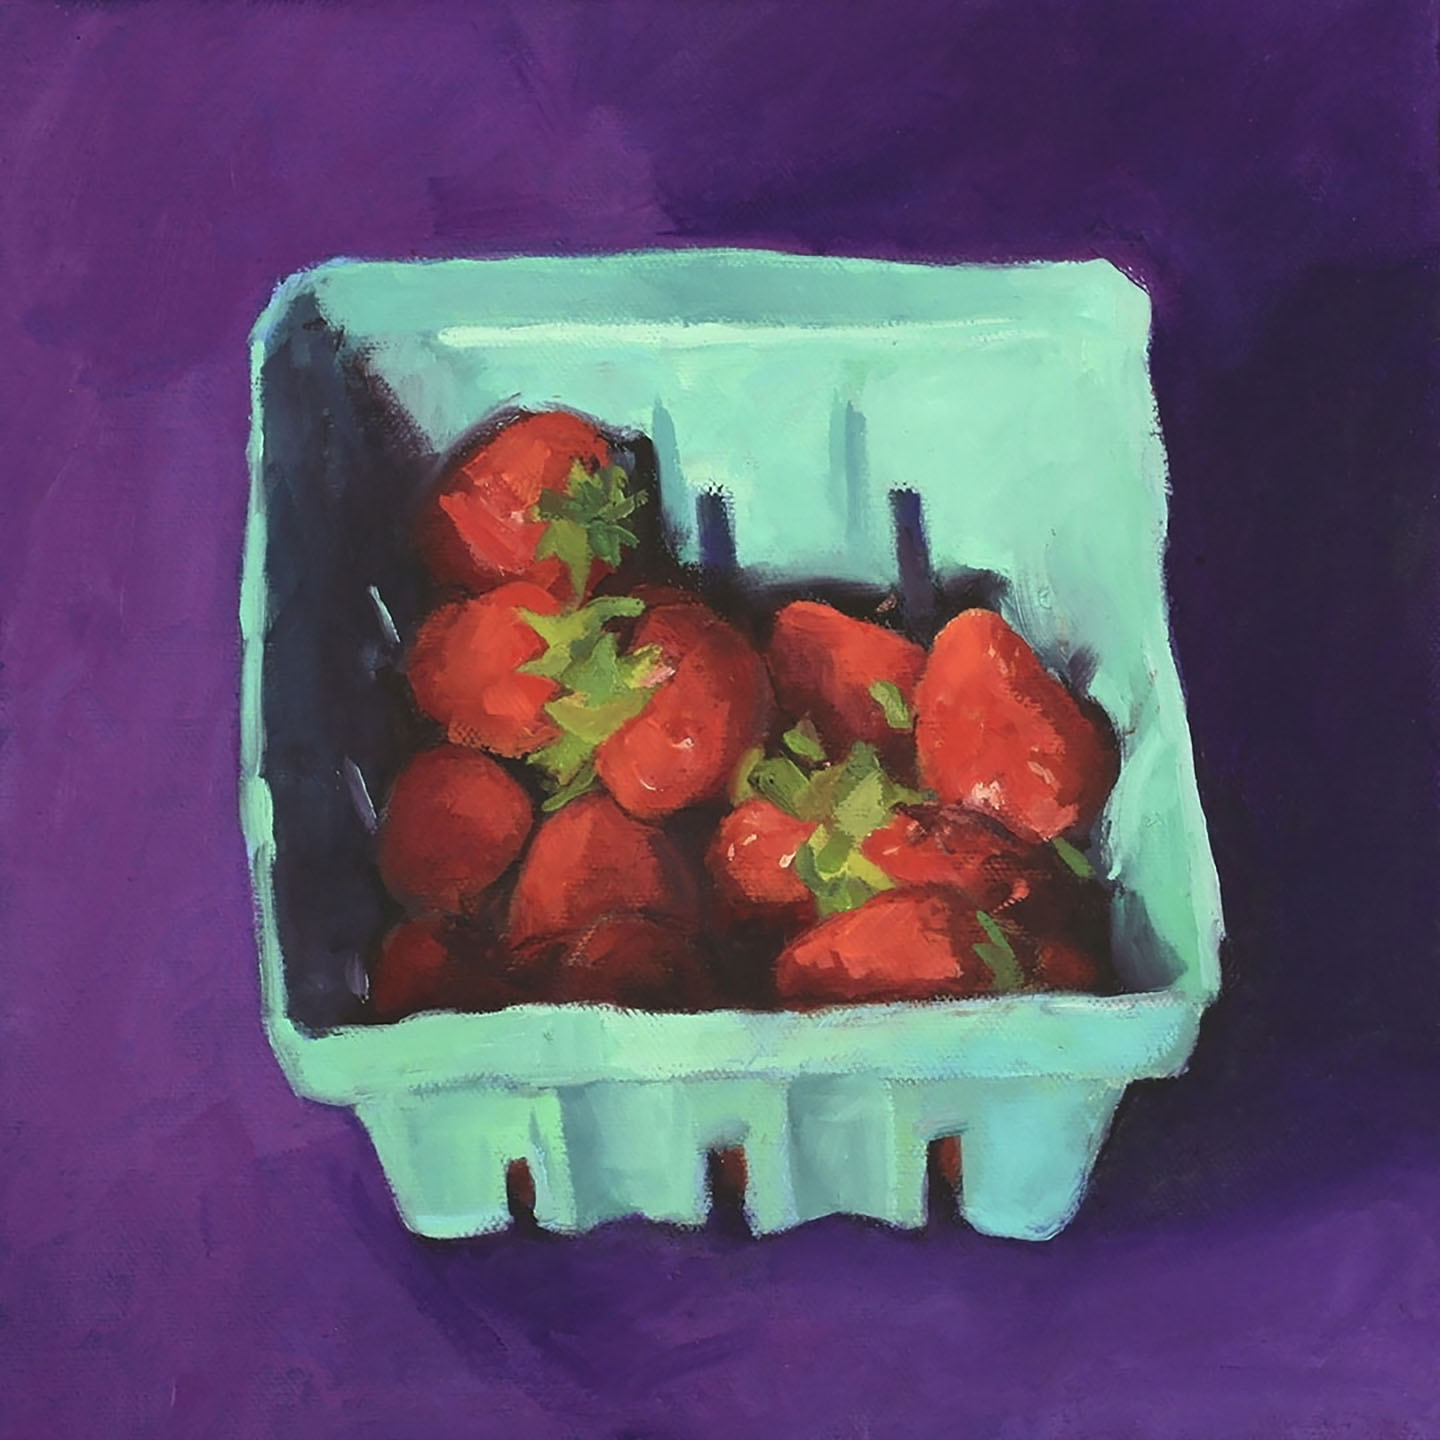 Strawberries on purple.